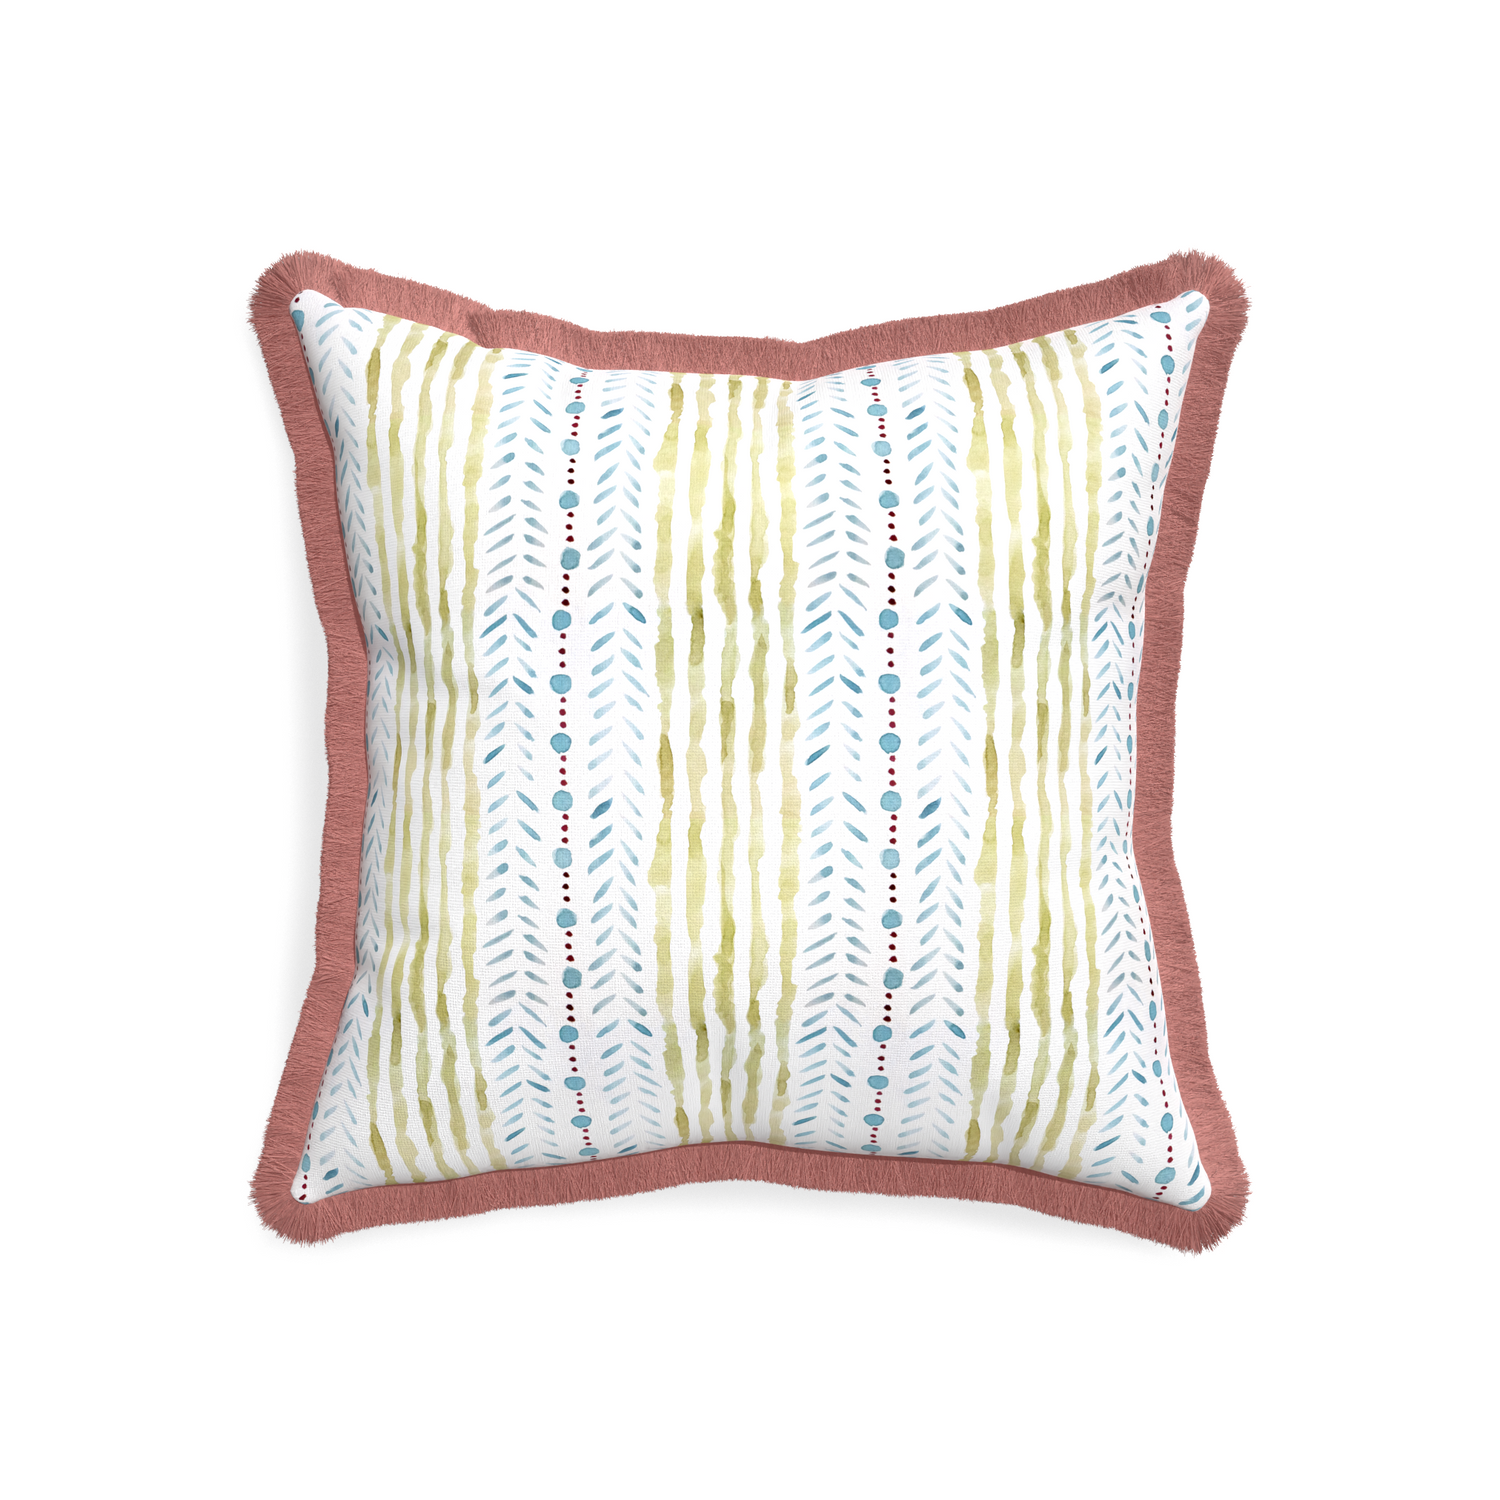 20-square julia custom pillow with d fringe on white background